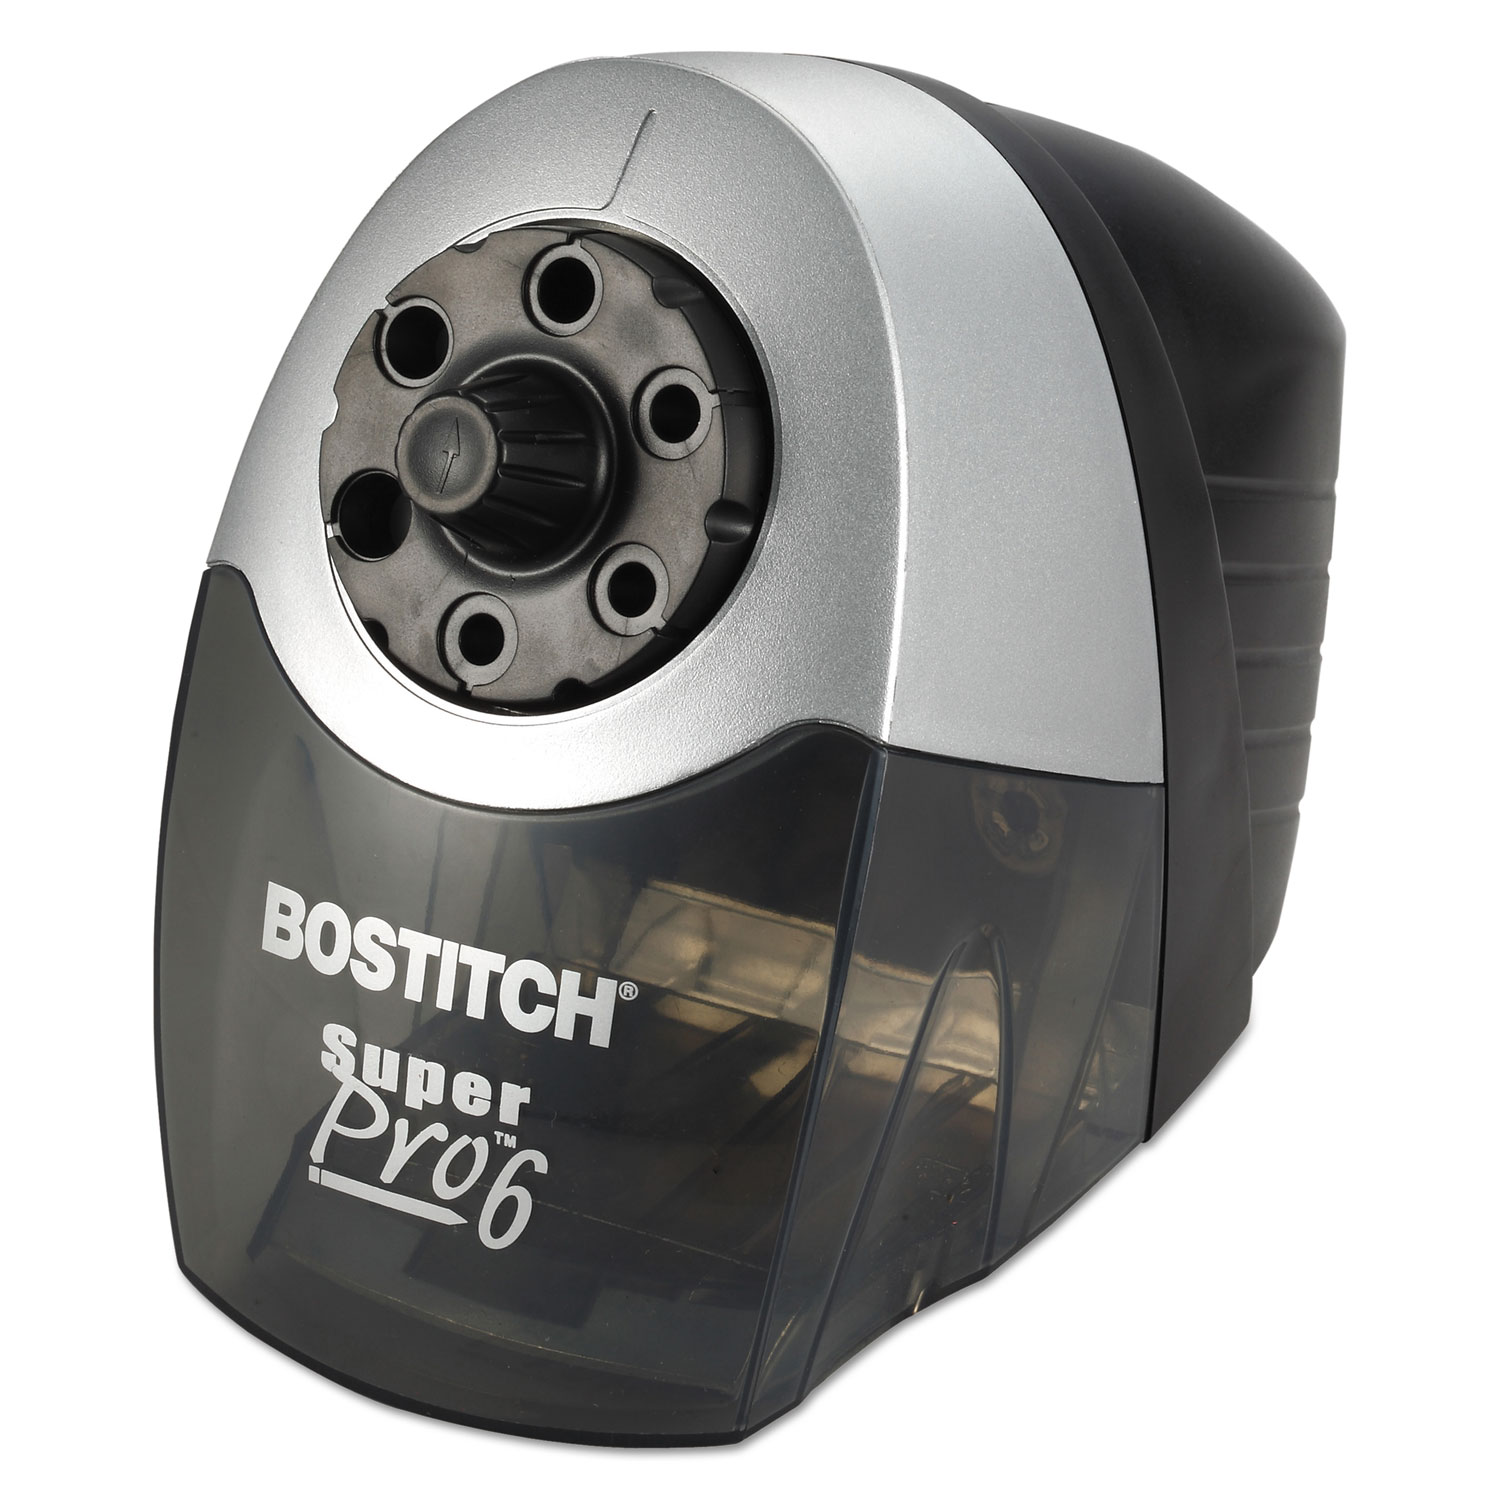  Bostitch EPS12HC Super Pro 6 Commercial Electric Pencil Sharpener, AC-Powered, 6.13 x 10.69 x 9, Gray/Black (BOSEPS12HC) 